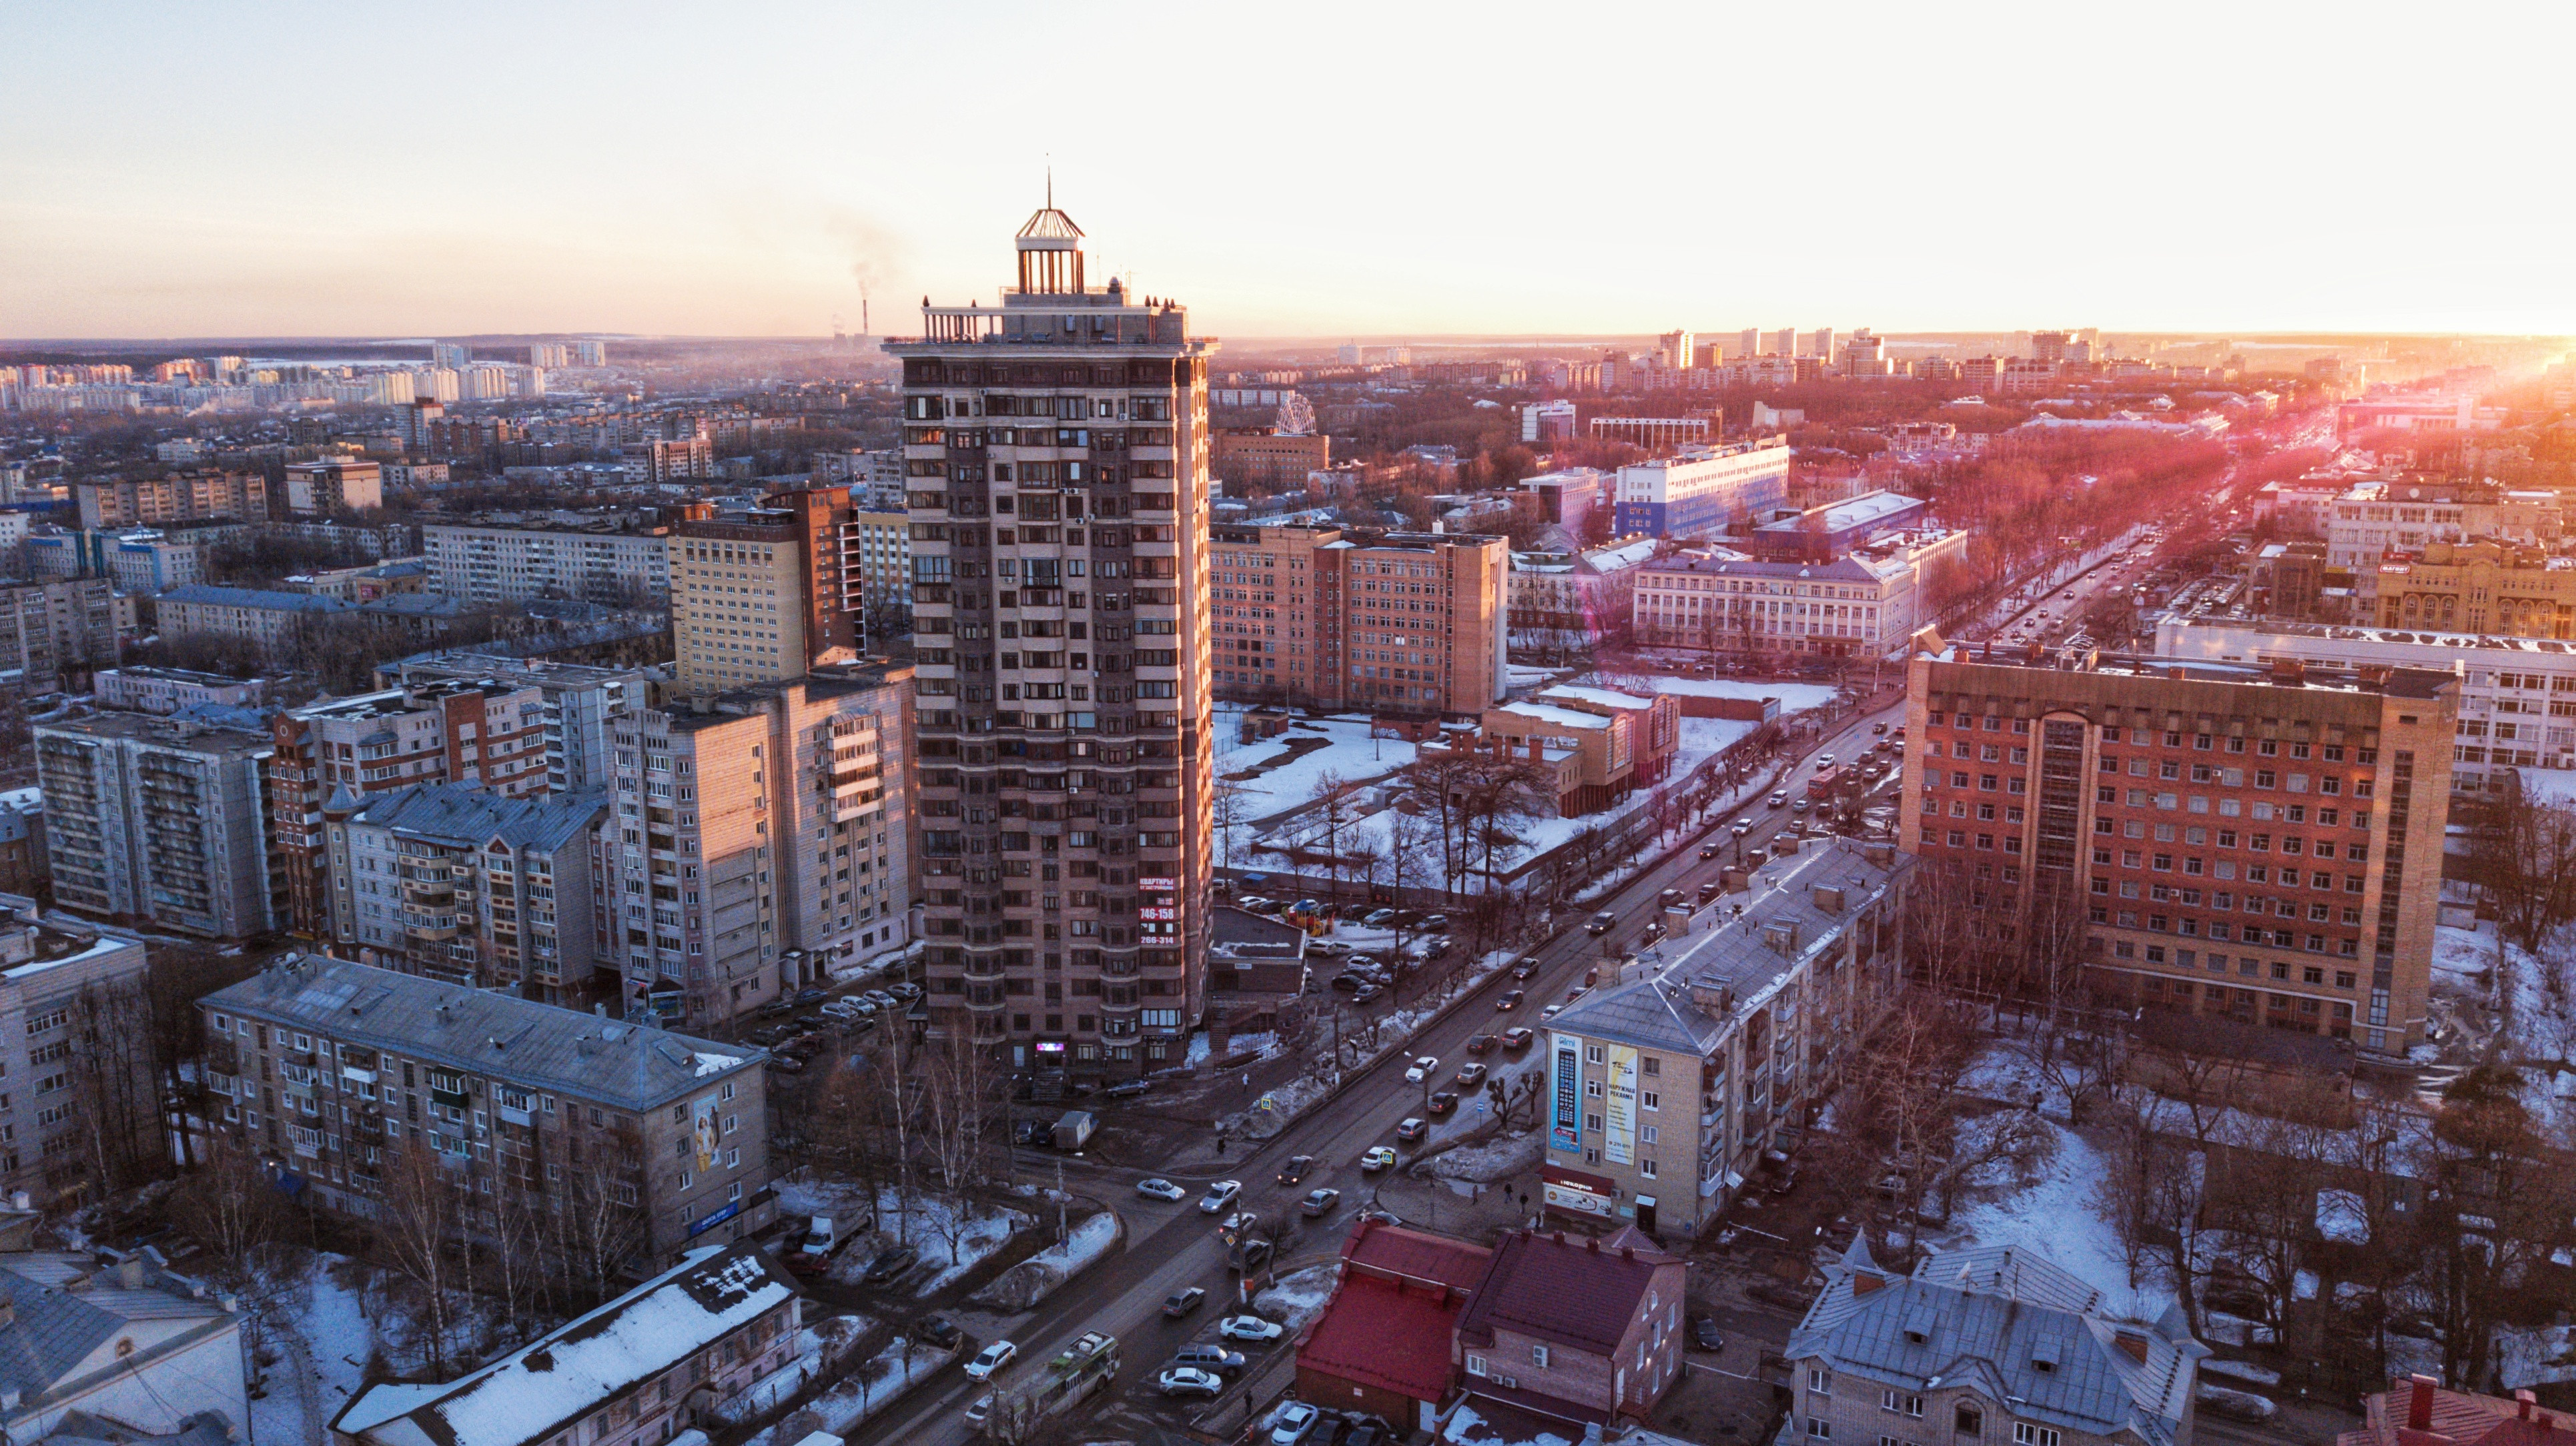 Город Киров на закате - Фото с высоты птичьего полета, съемка с квадрокоптера - PilotHub